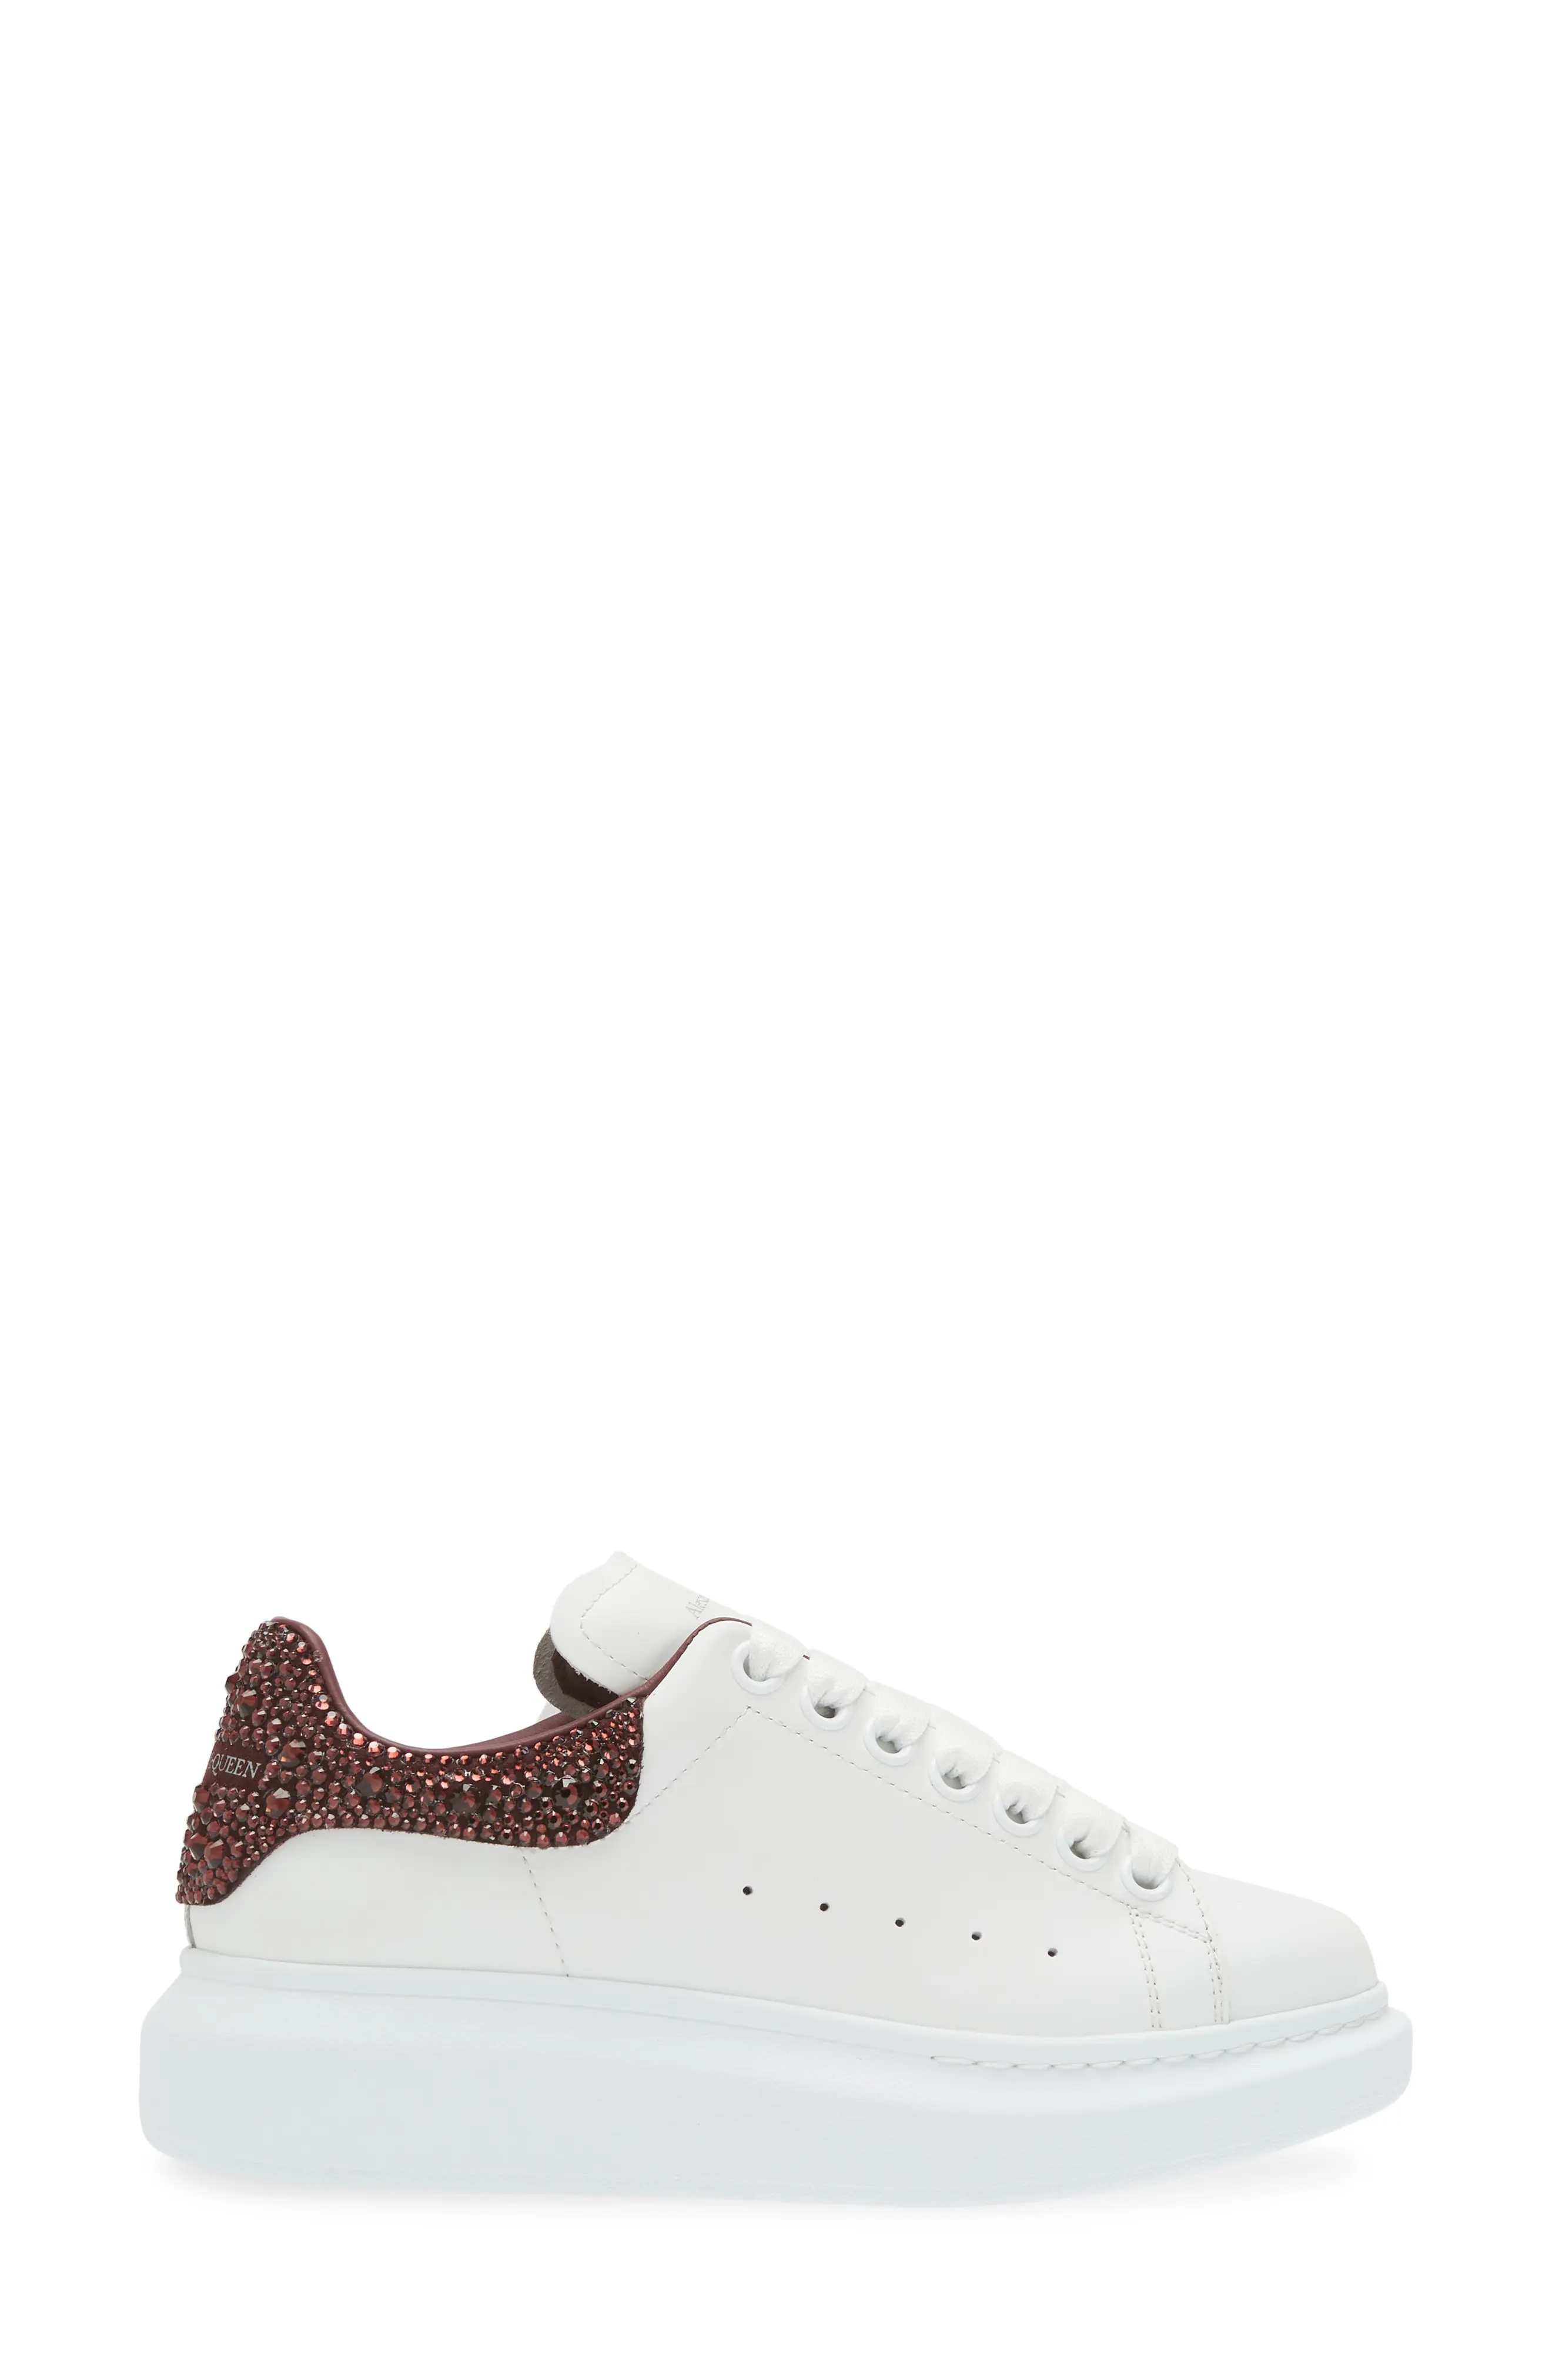 Oversized Crystal Embellished Sneaker in White/Burgundy - 3